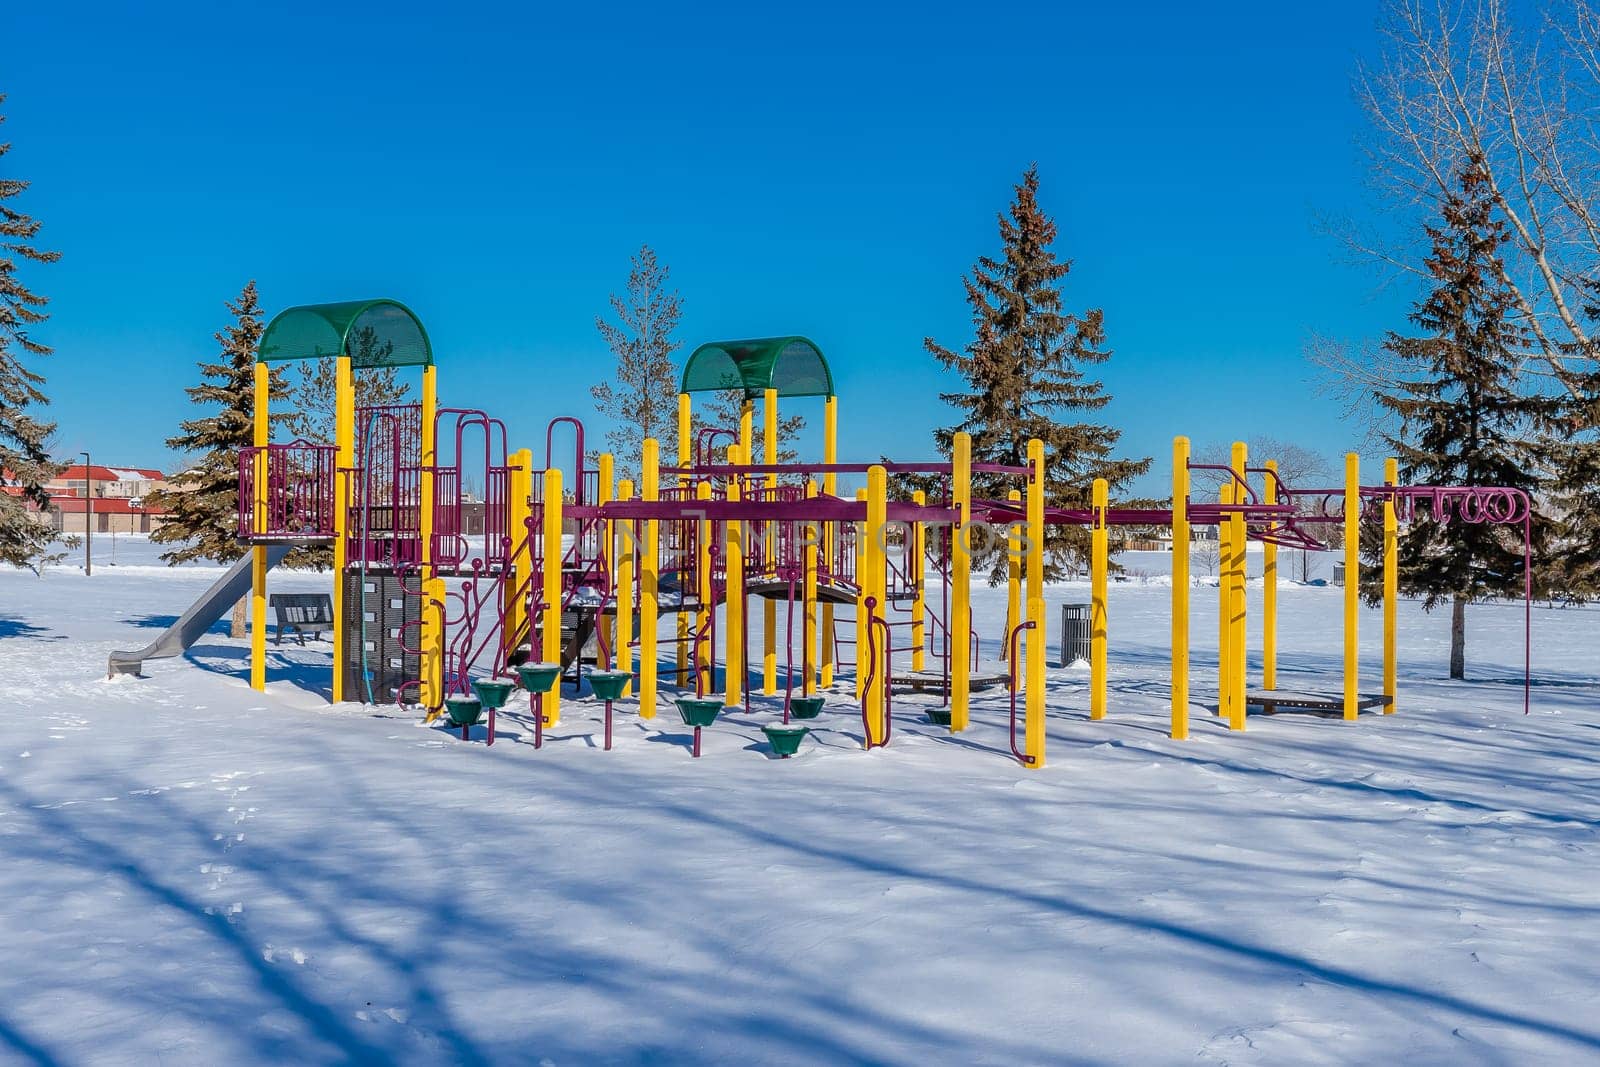 Dundonald Park in Saskatoon, Canada by sprokop